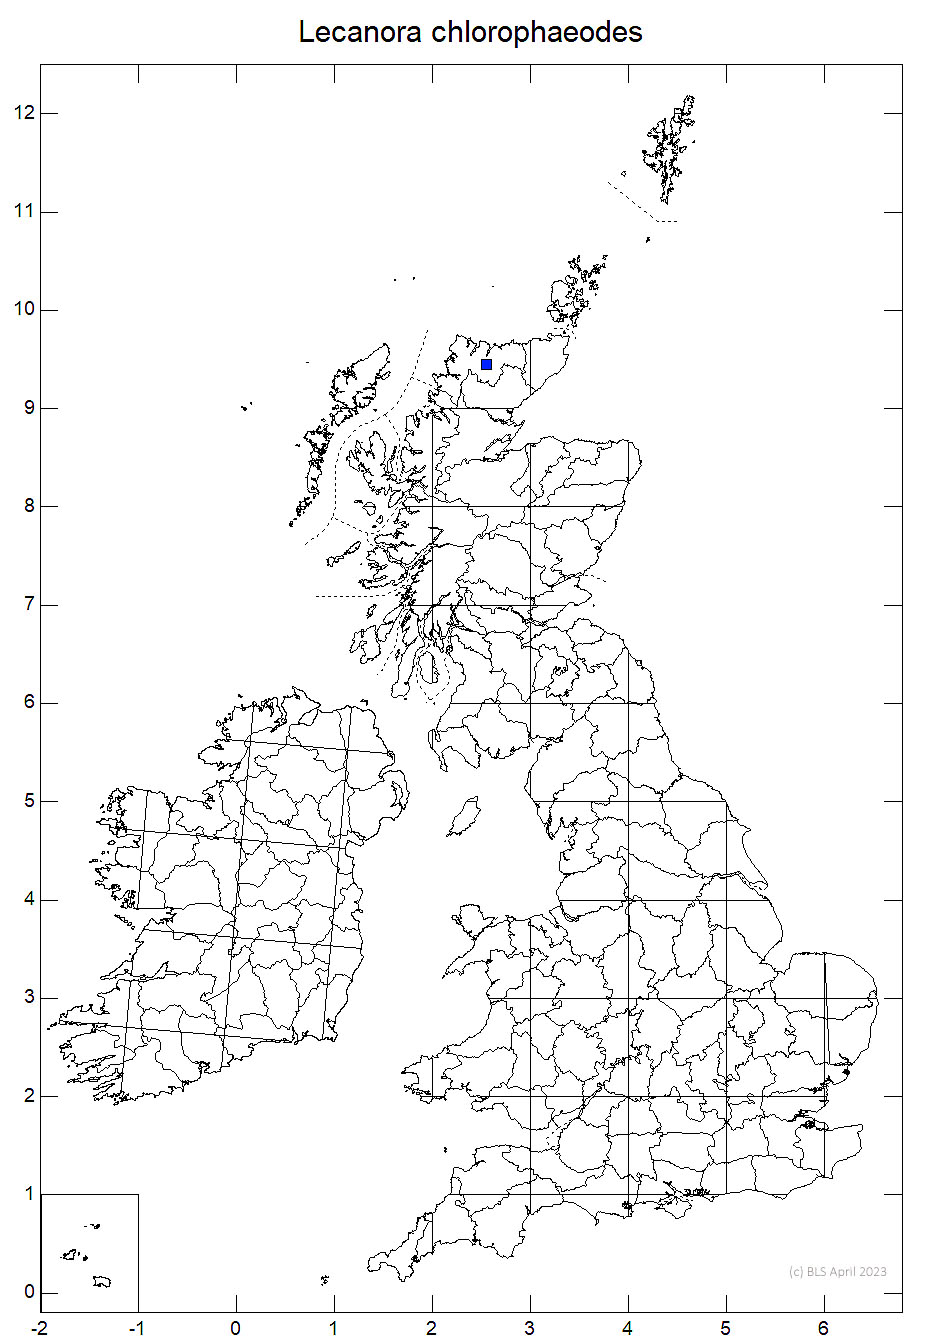 Lecanora chlorophaeodes 10km sq distribution map